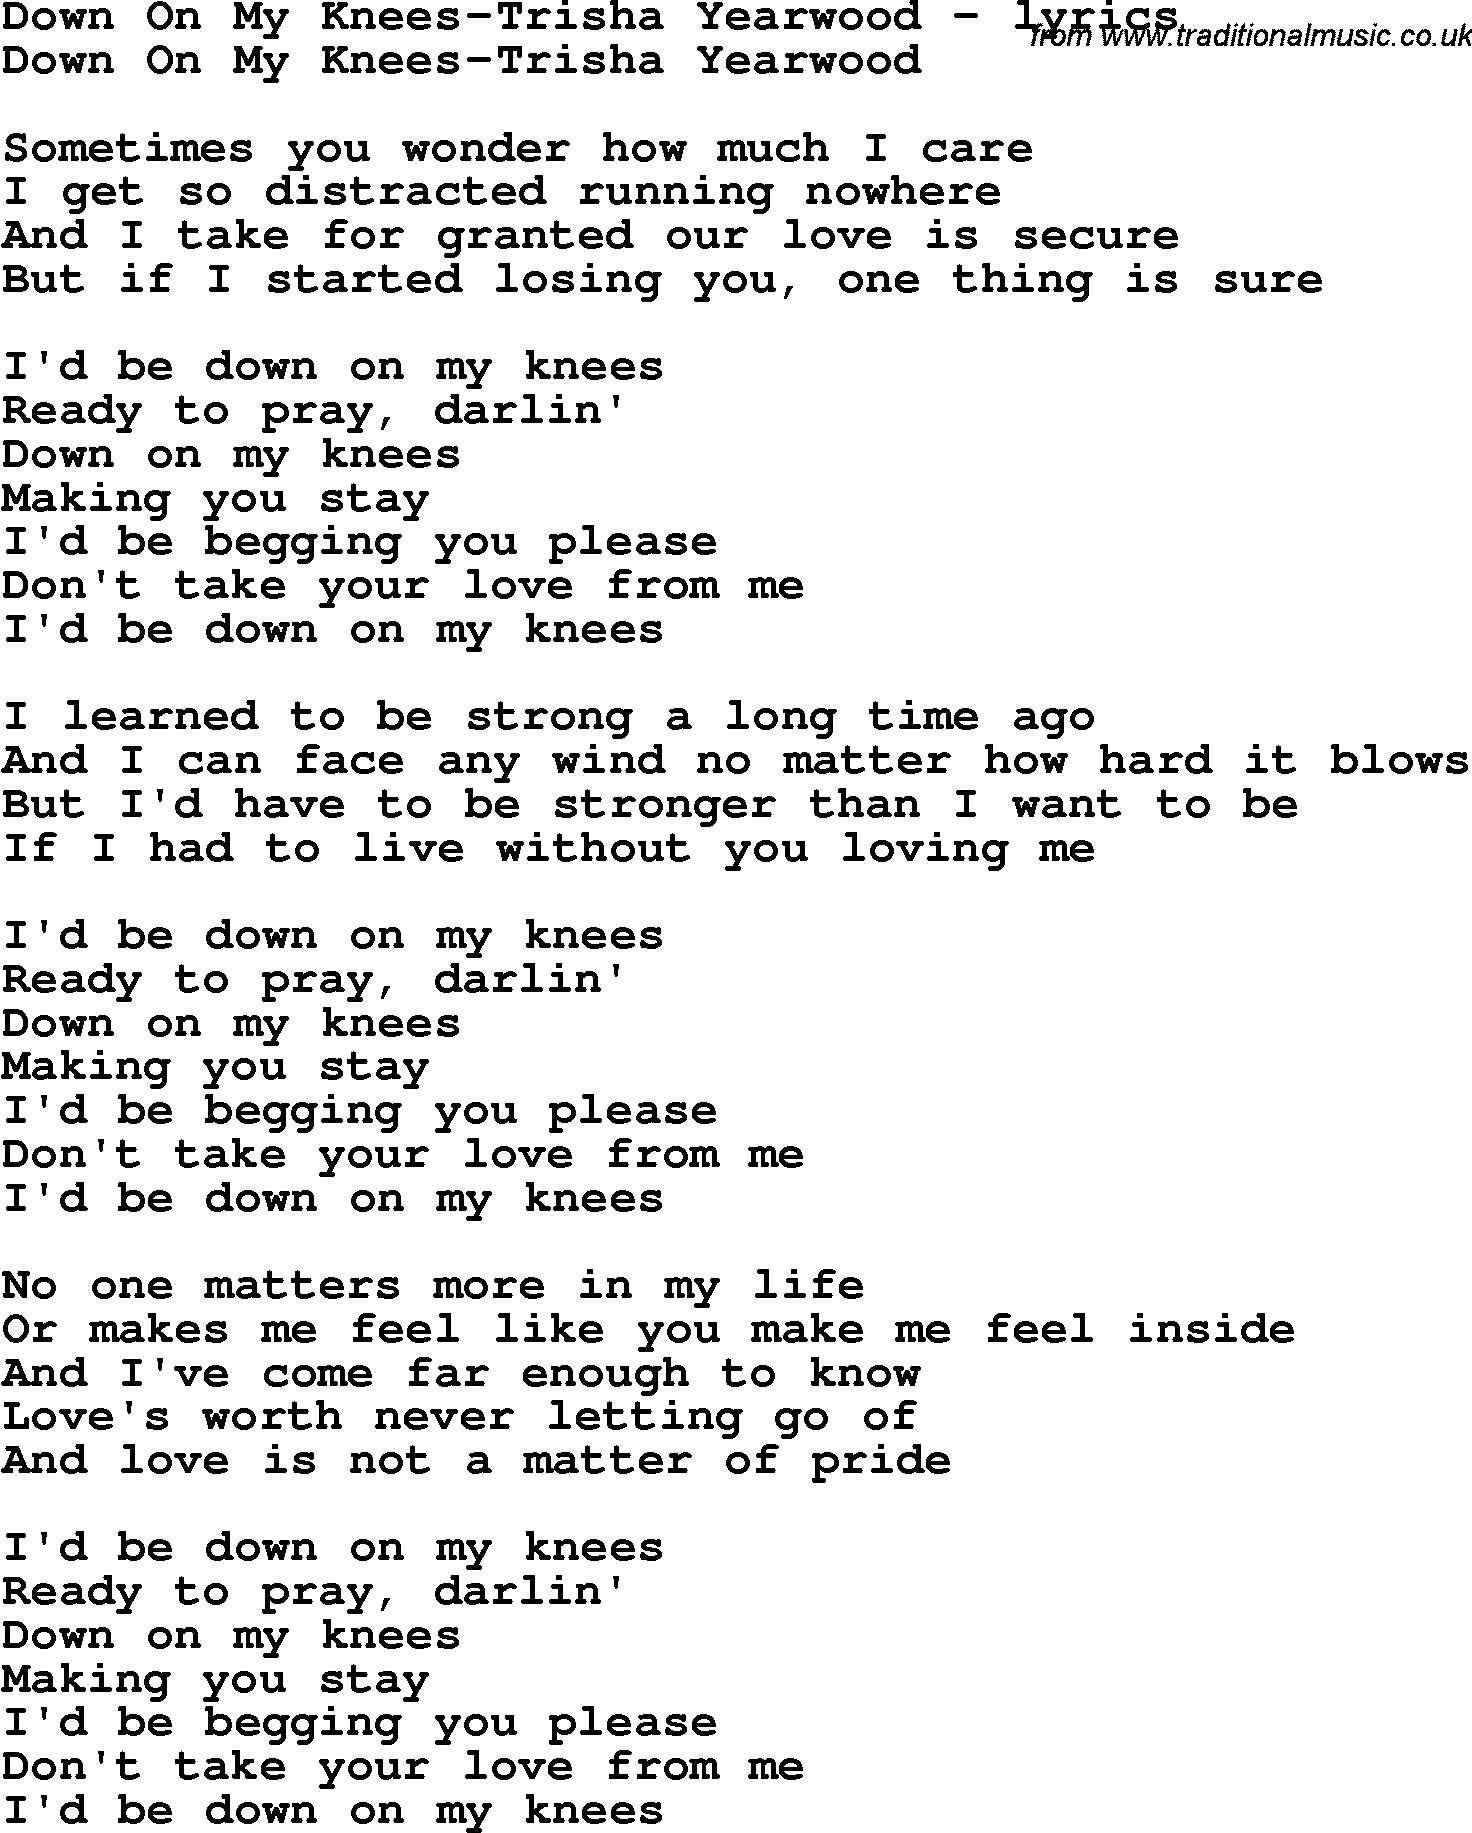 Love Song Lyrics for: Down On My Knees-Trisha Yearwood